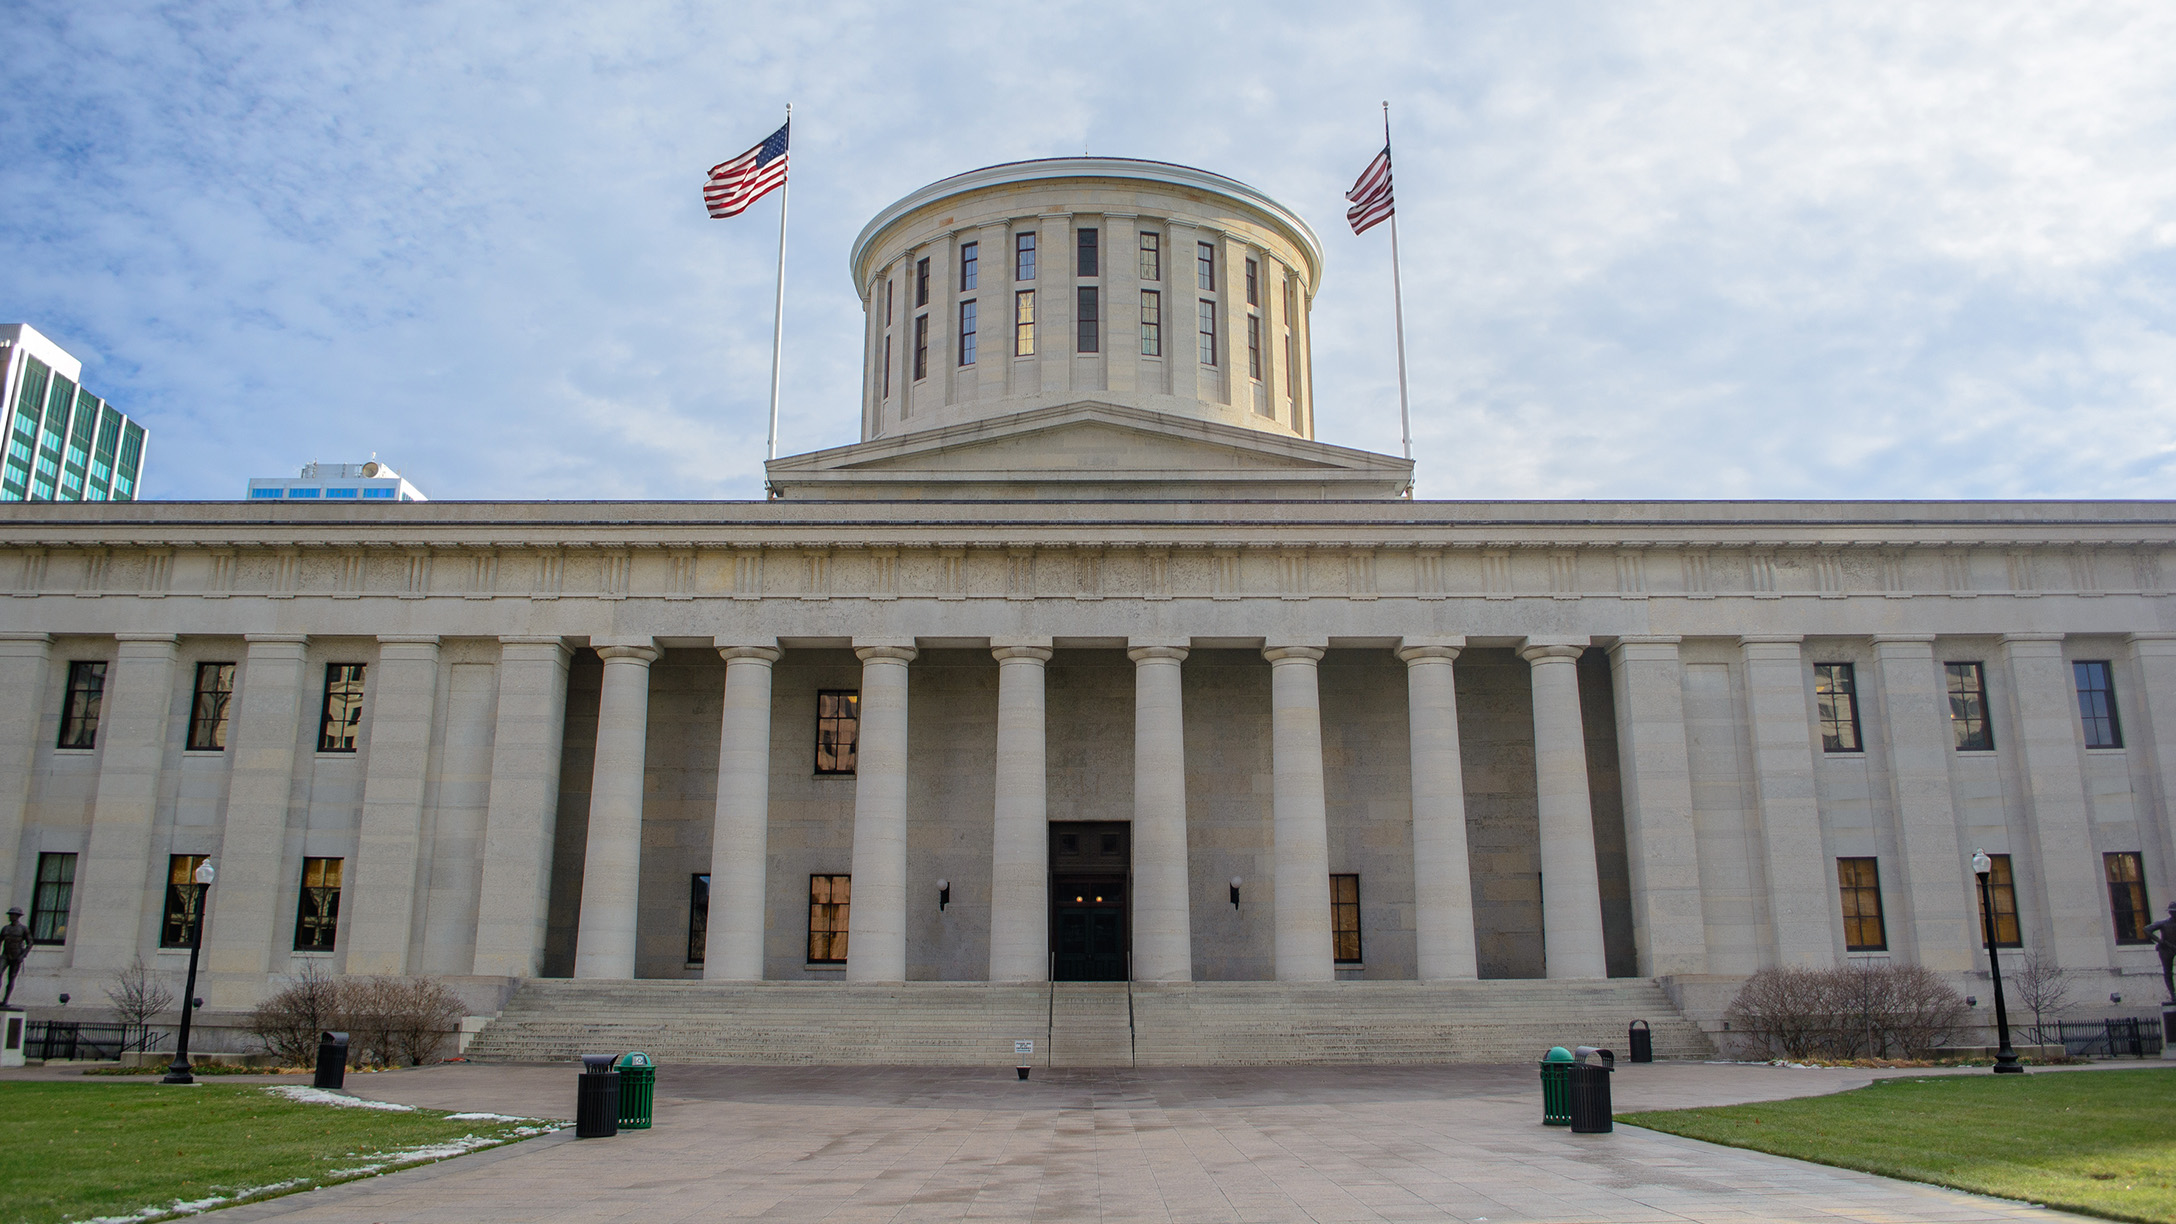 Ohio Statehouse, the captial building of Ohio.